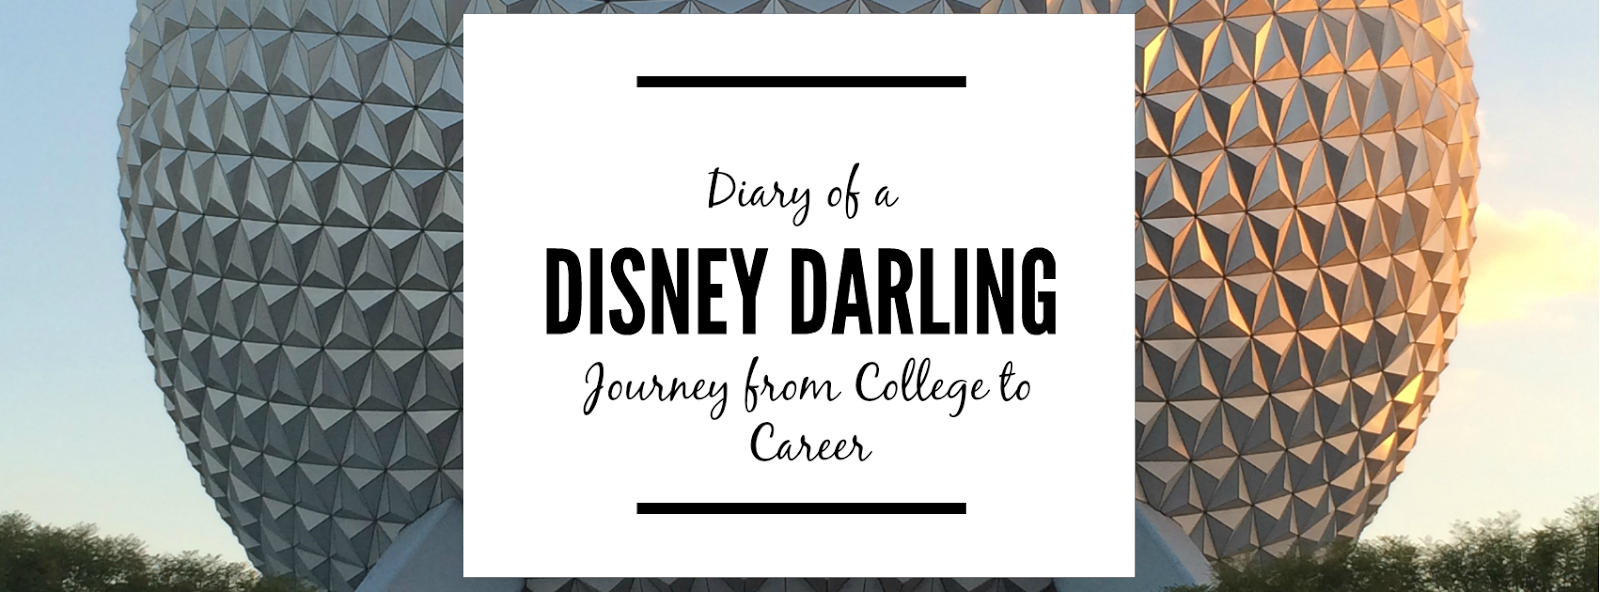 Diary of a Disney Darling